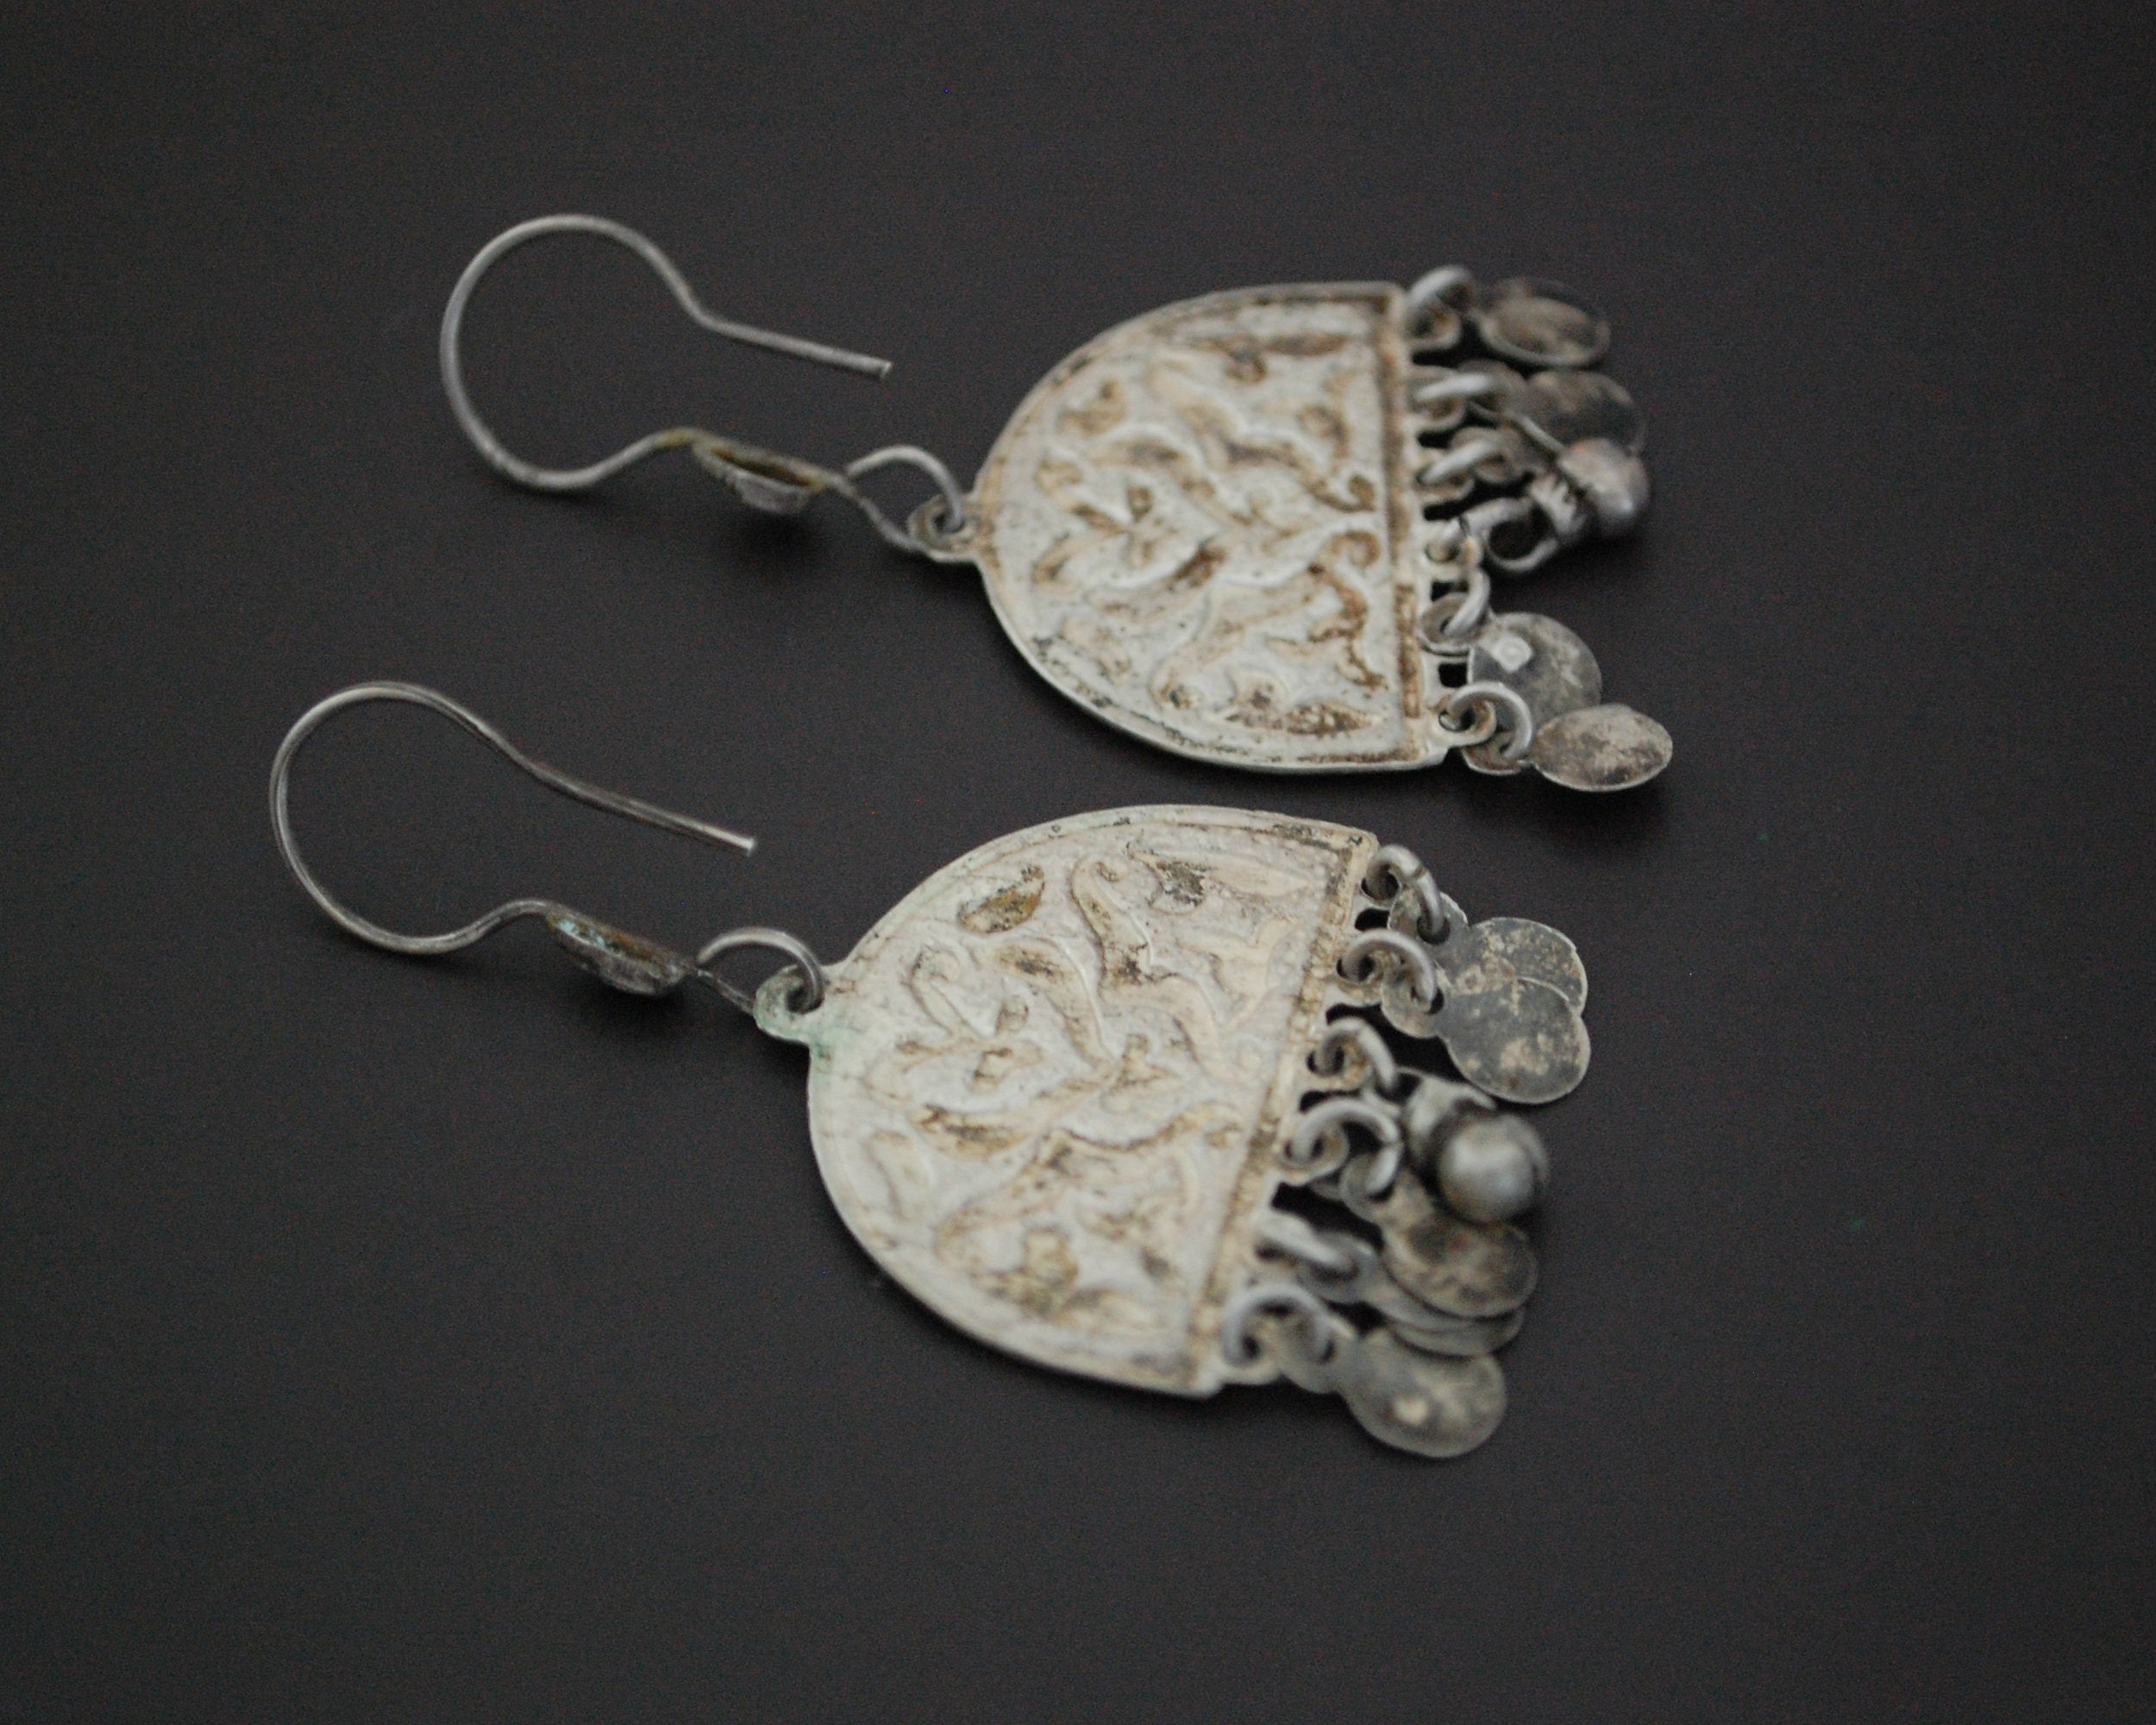 Ethnic Silver Dangle Earrings from Egypt